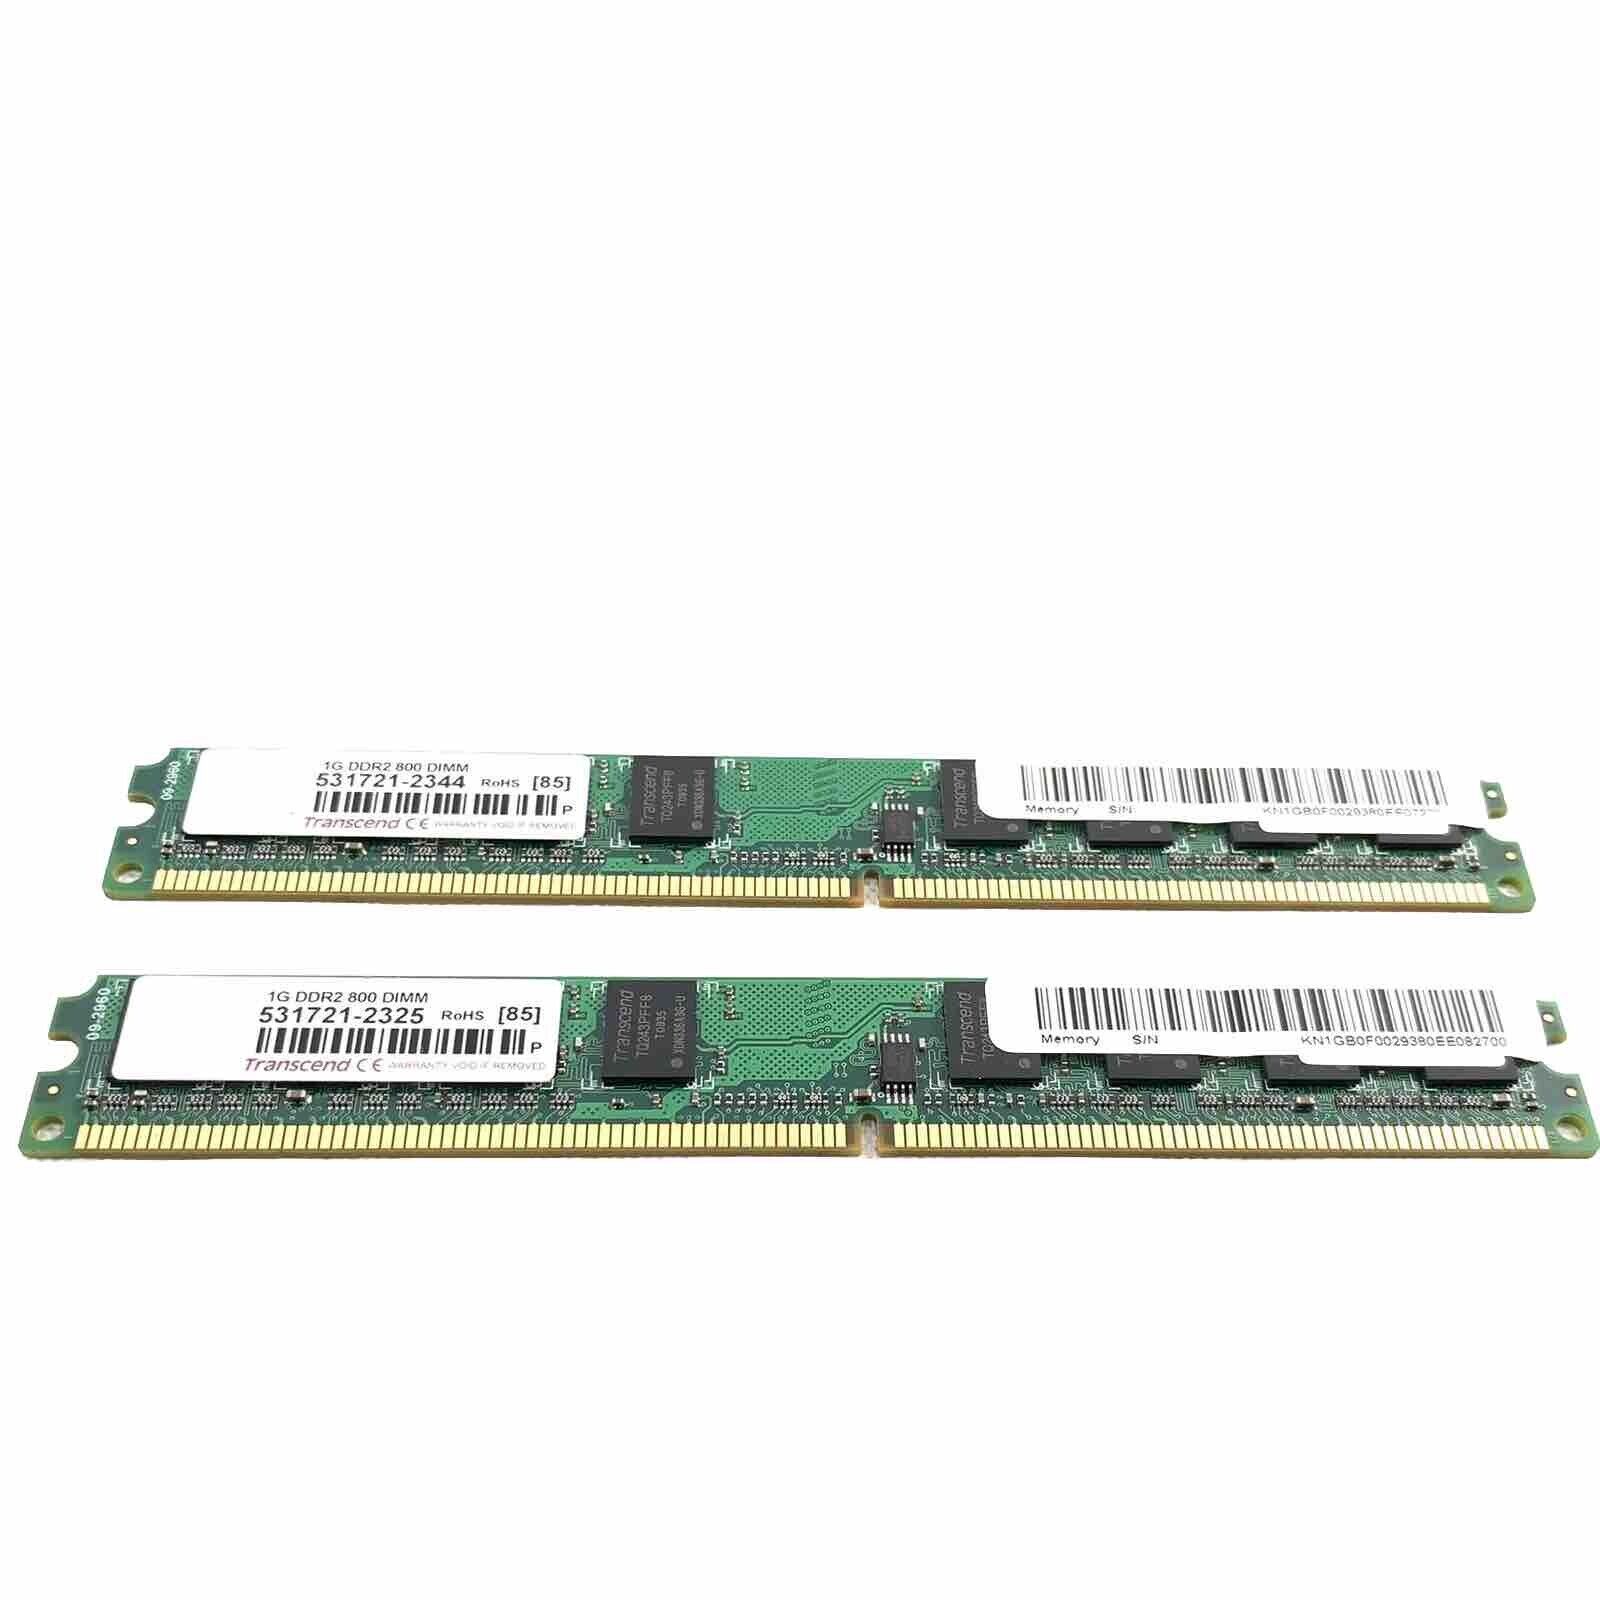 2x Transcend 1G DDR2 800 DIMM Low Profile Memory RAM Unit